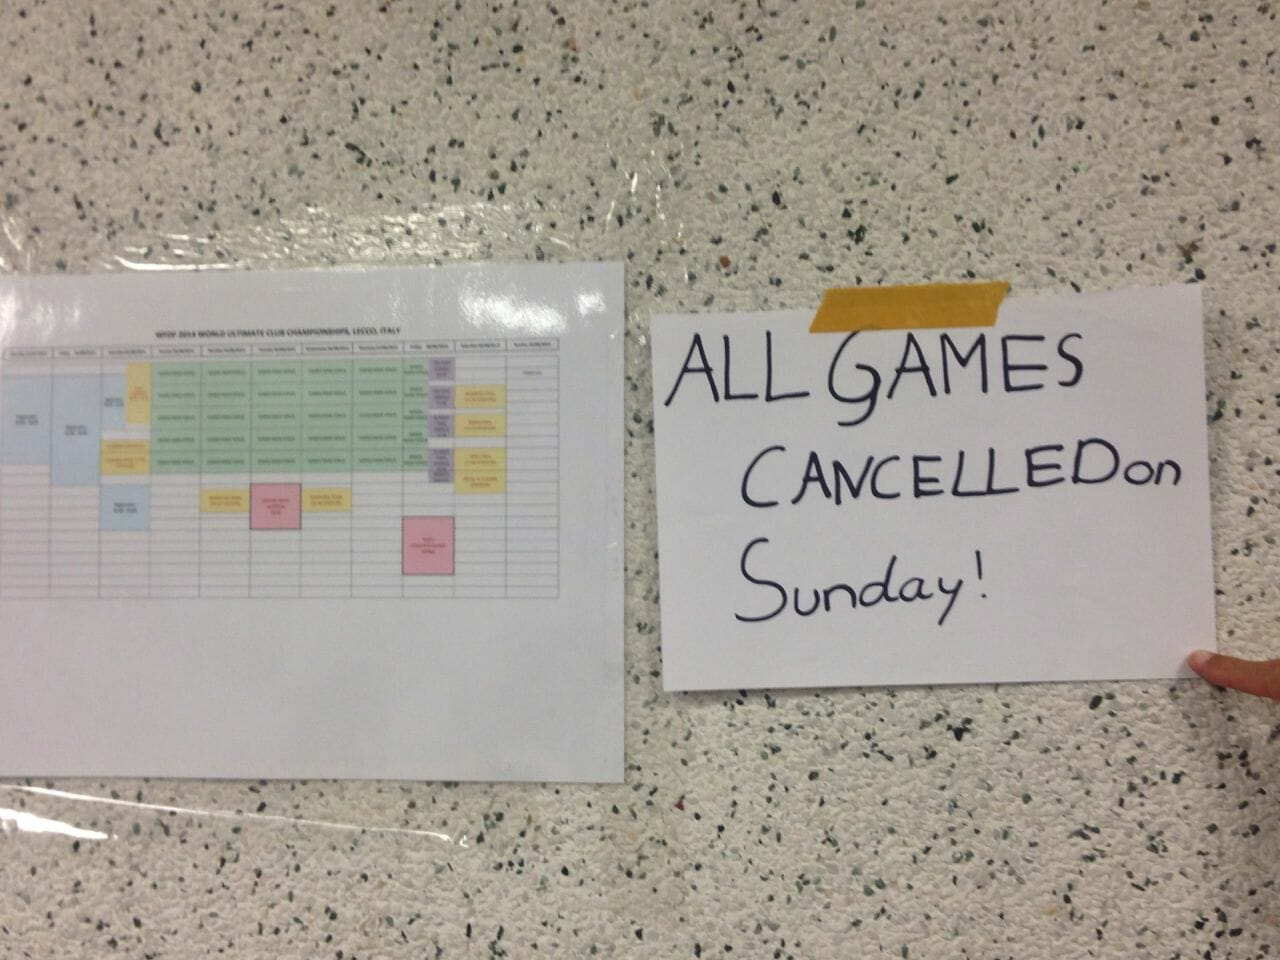 Games were canceled on Sunday around 9 PM Saturday night.